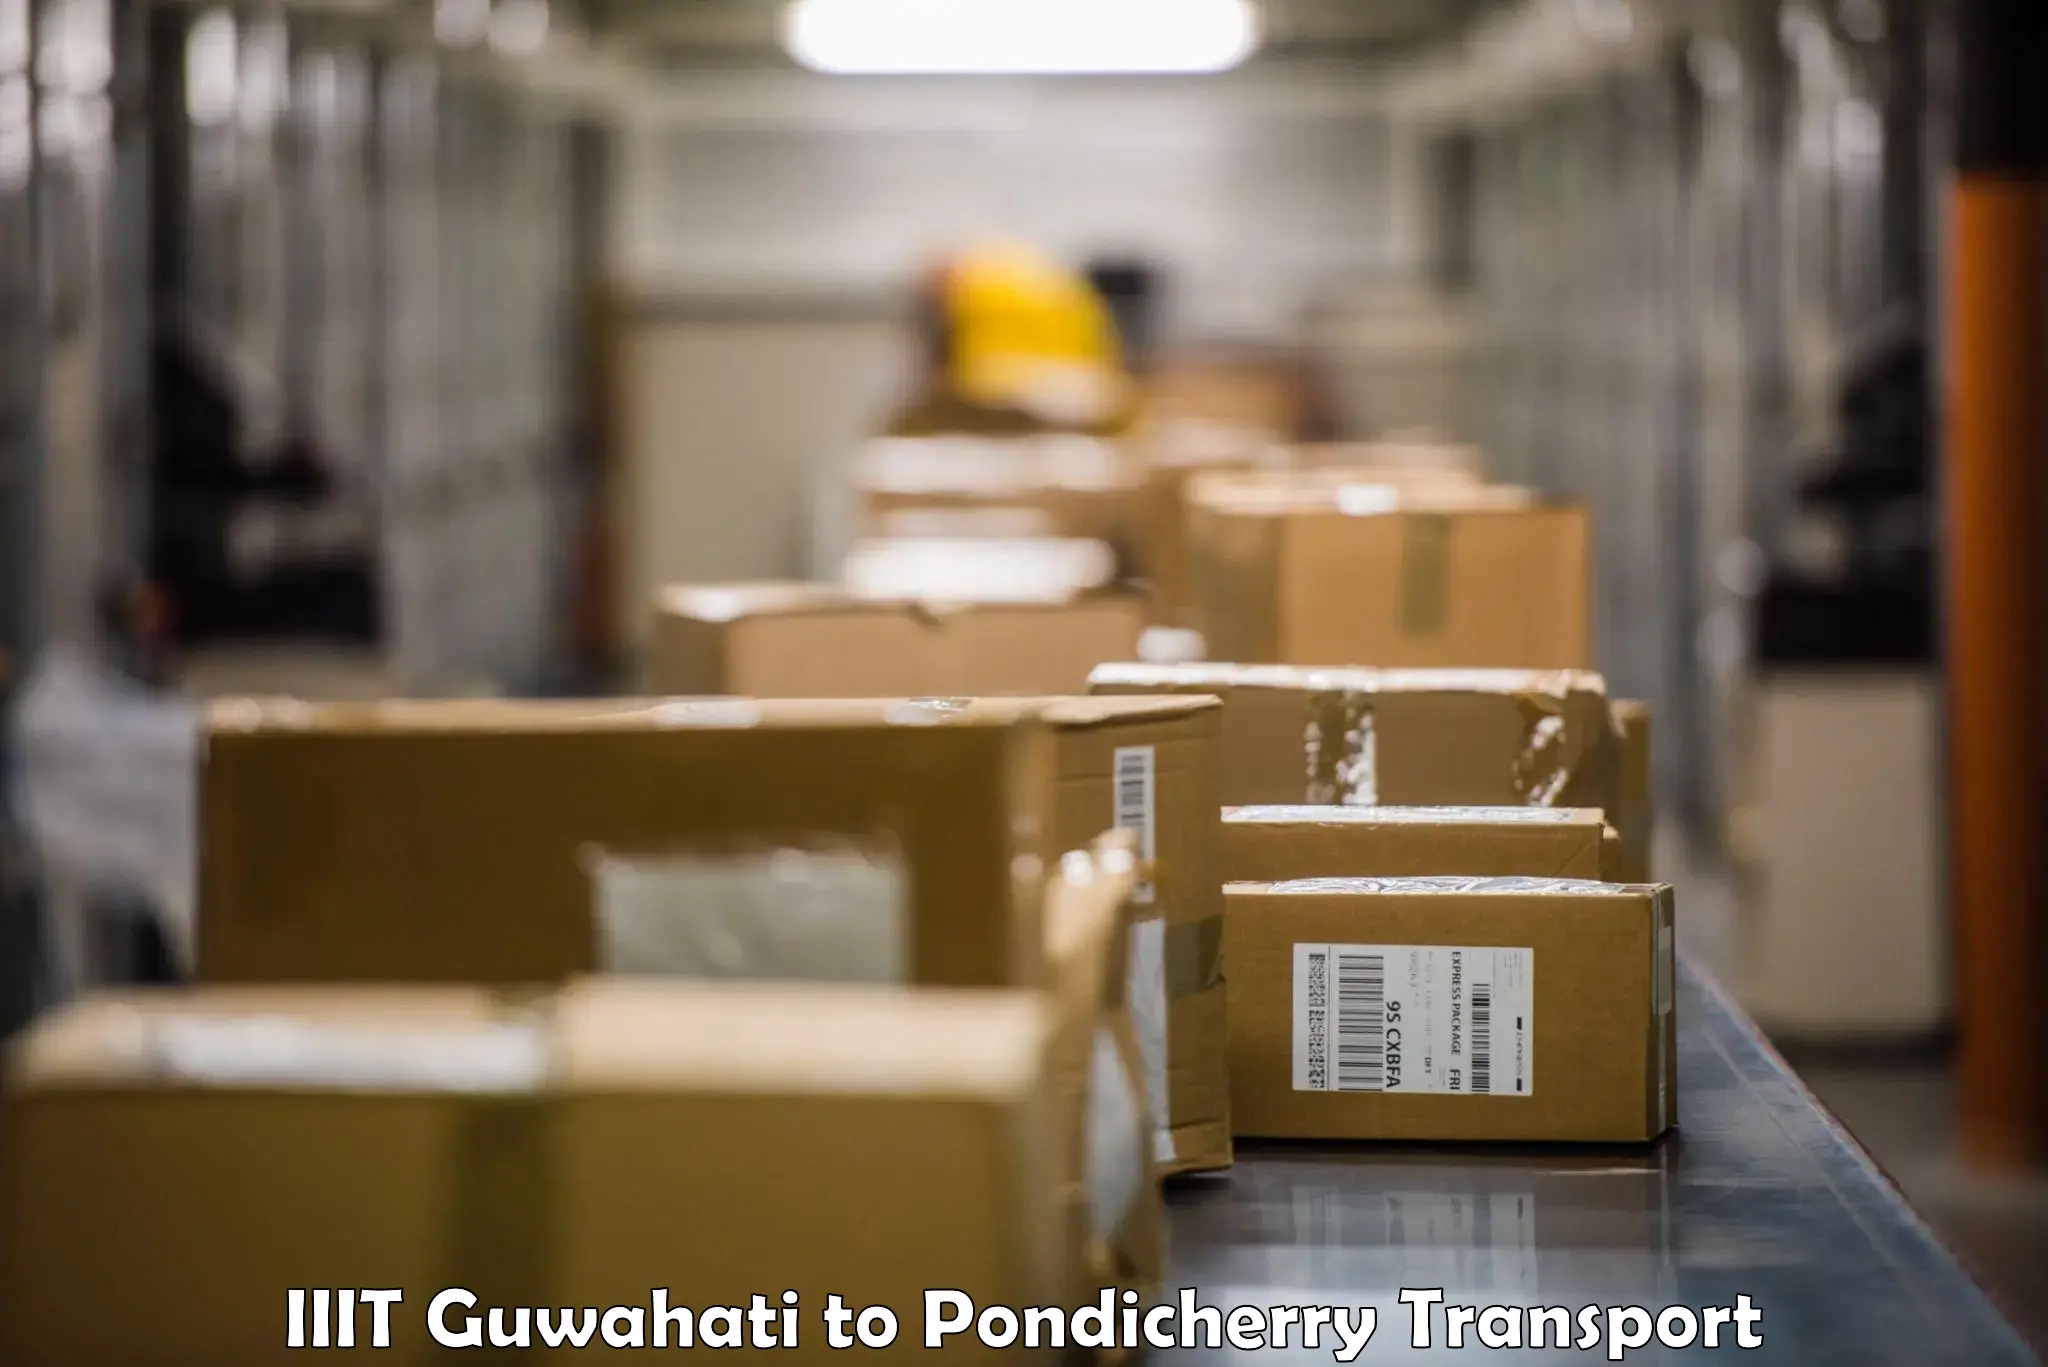 Delivery service IIIT Guwahati to Pondicherry